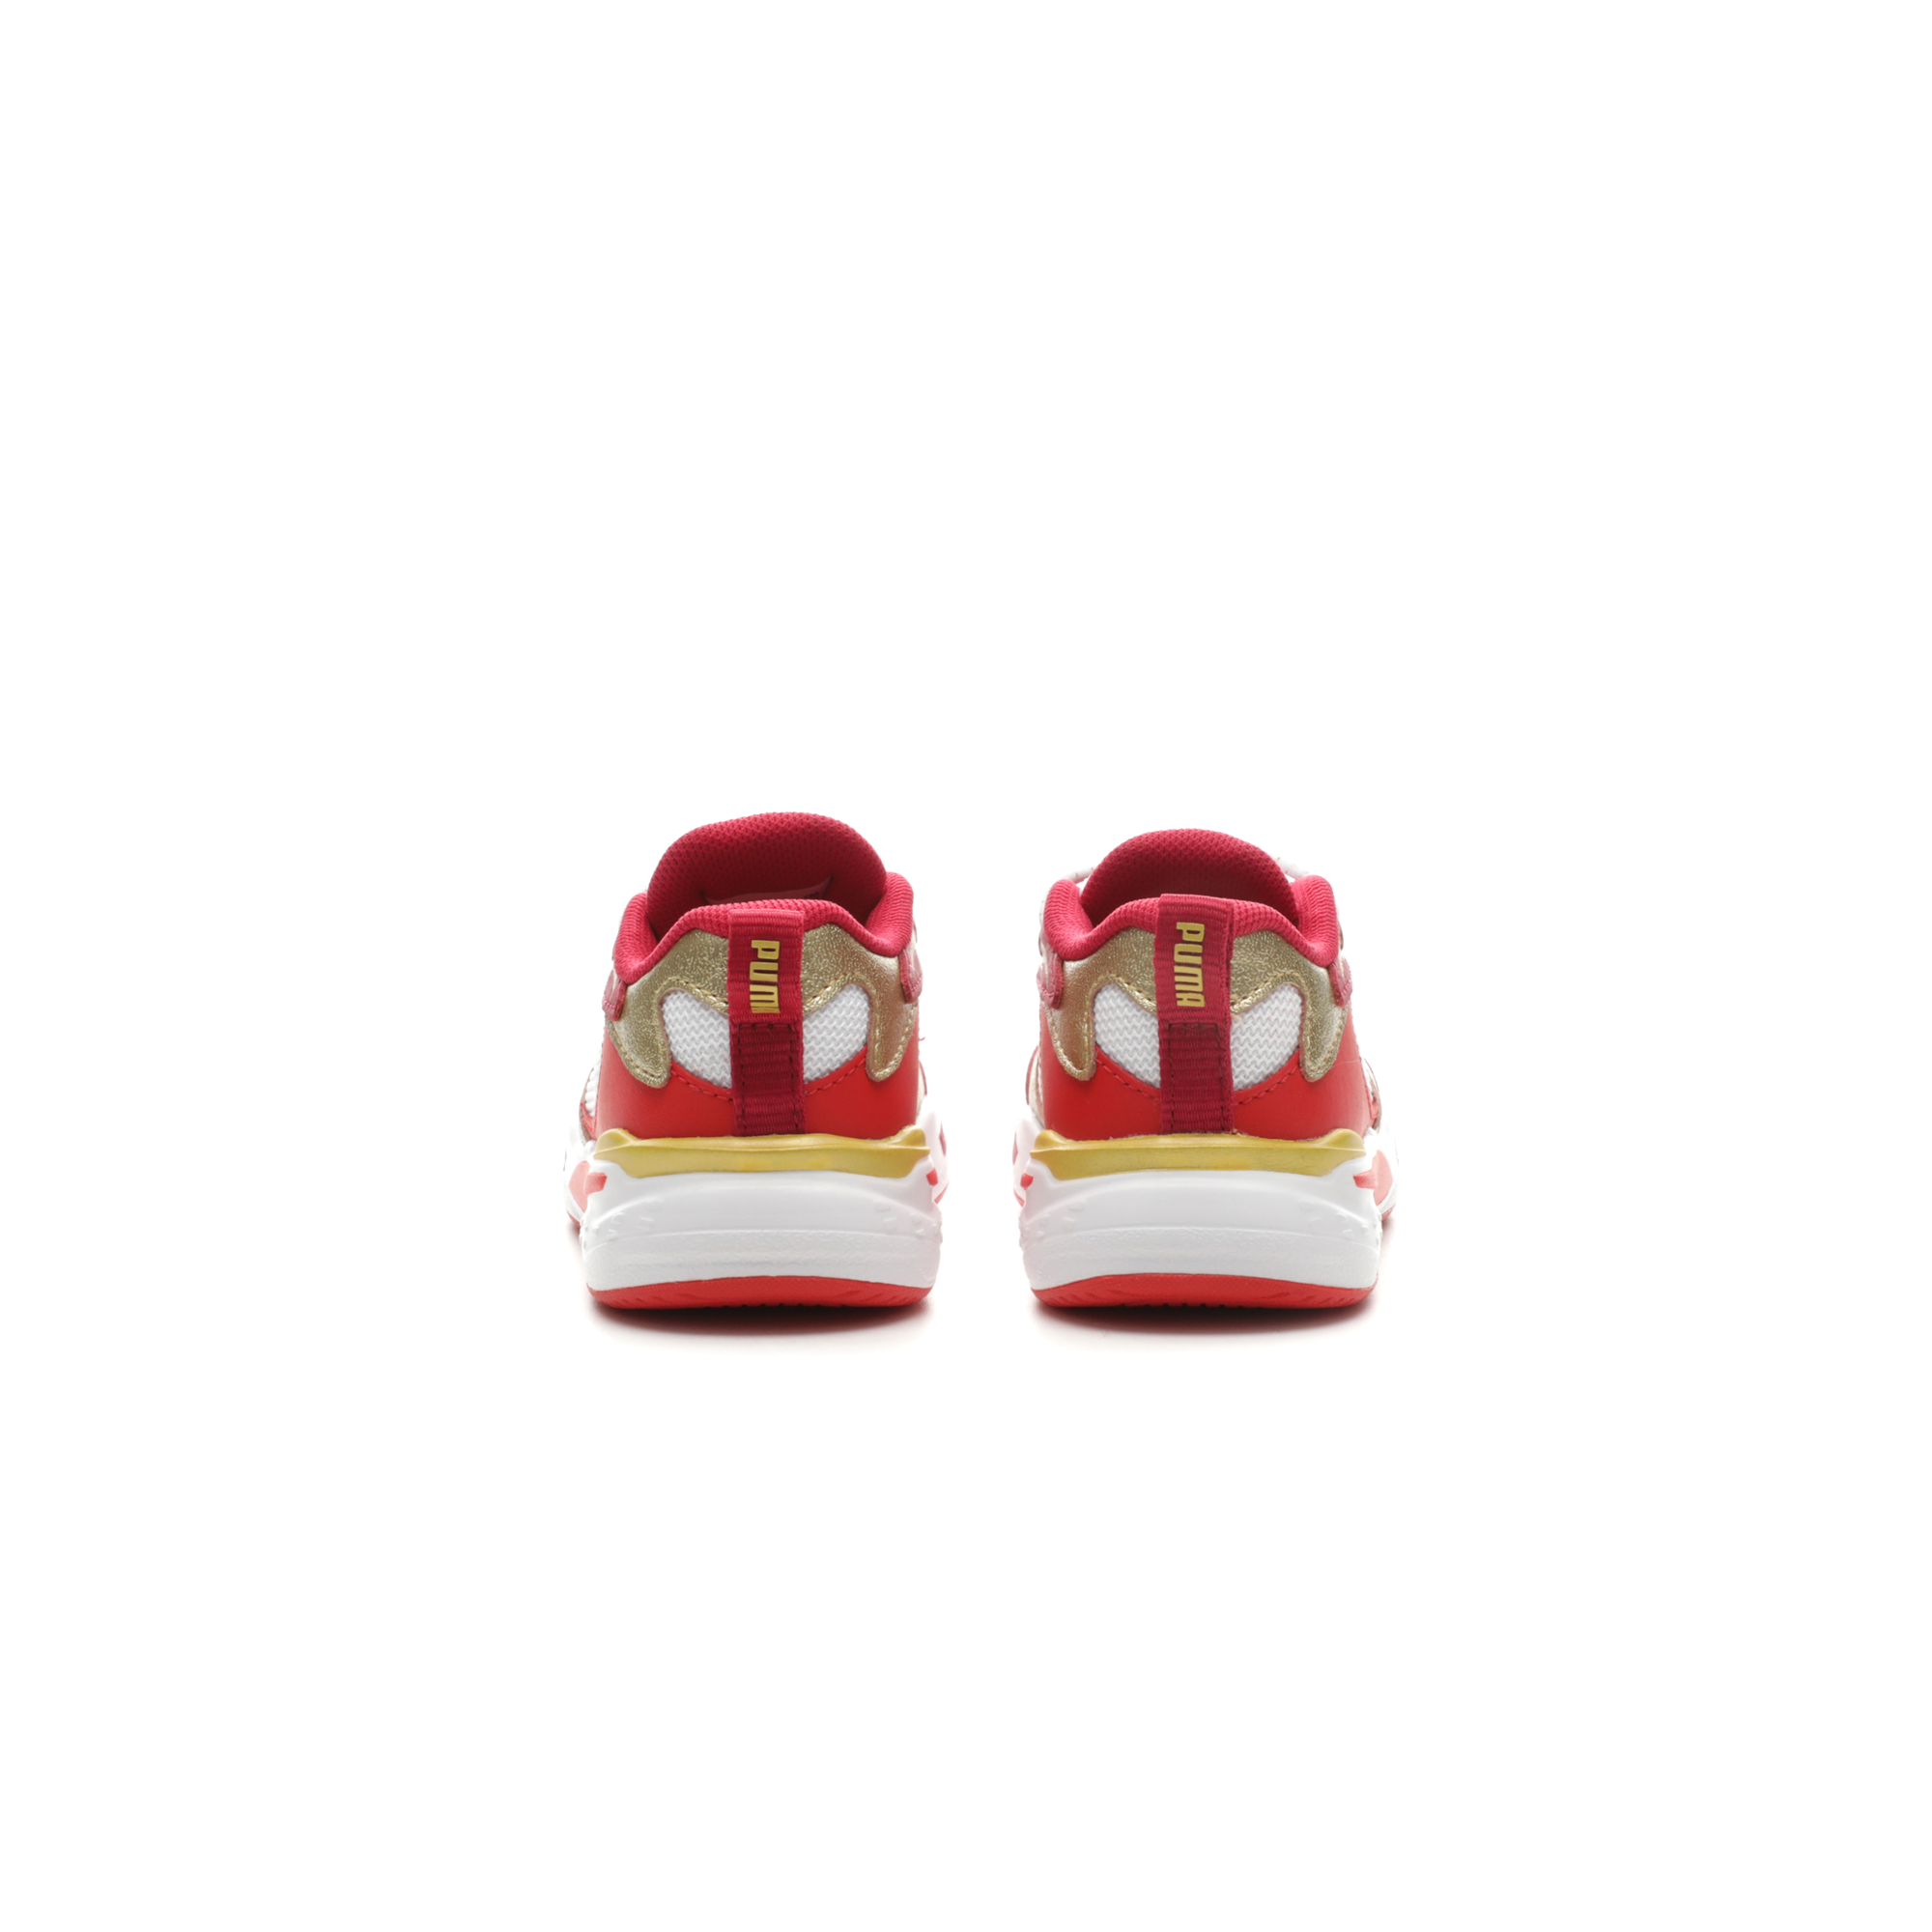 puma-kids-rs-fast-glitz-shoes-toddler-384749-01